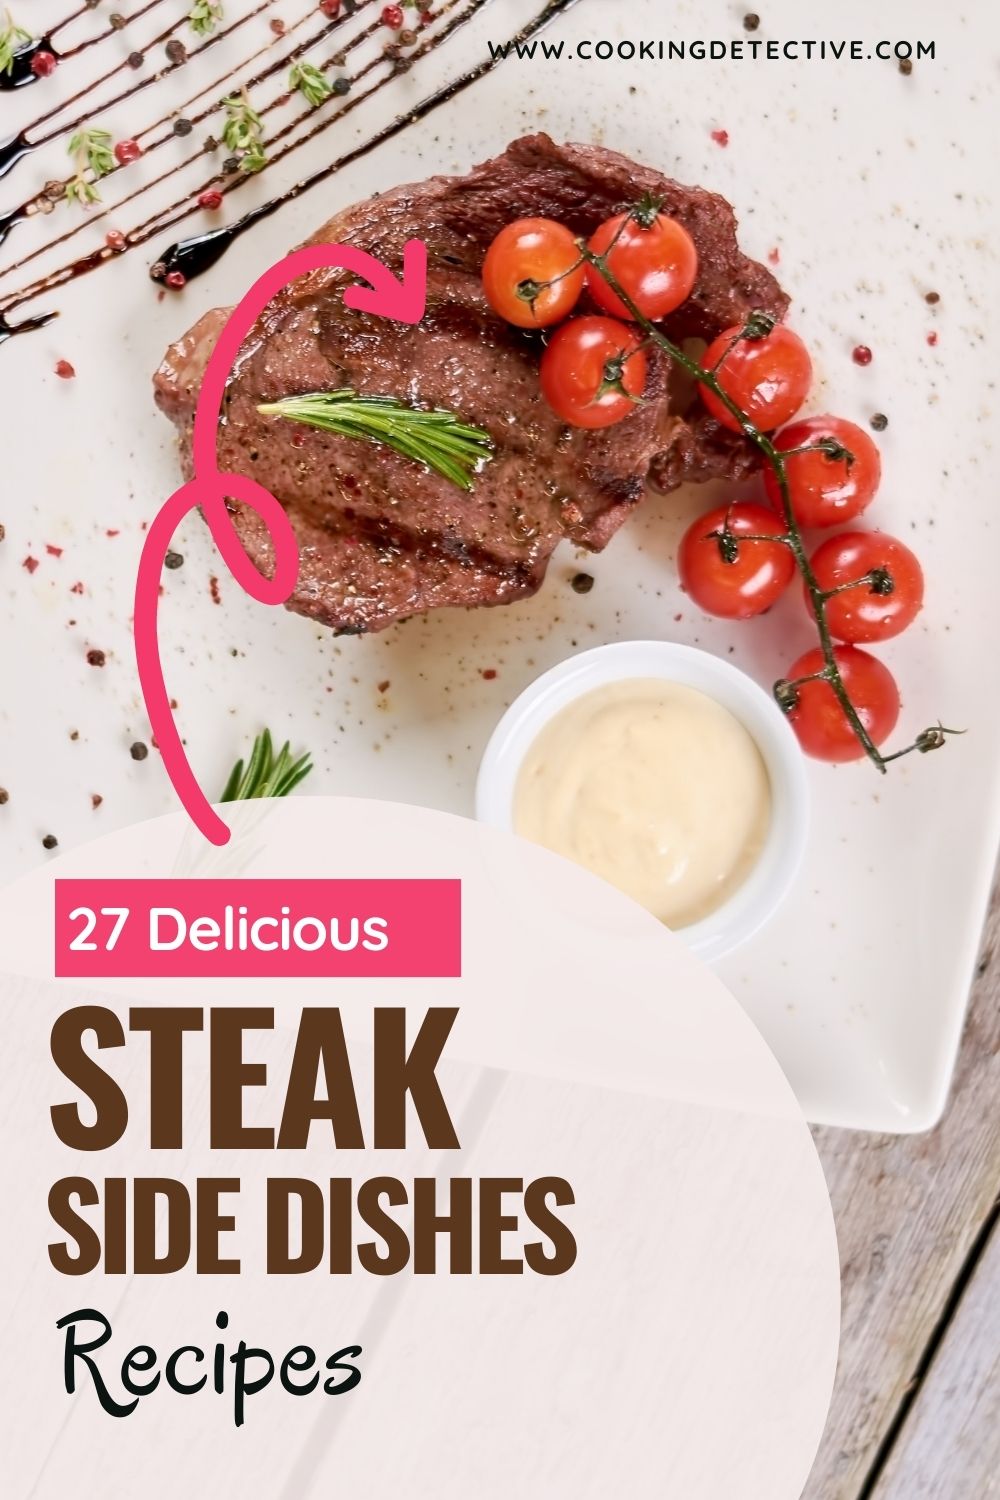 Steak Side Dishes